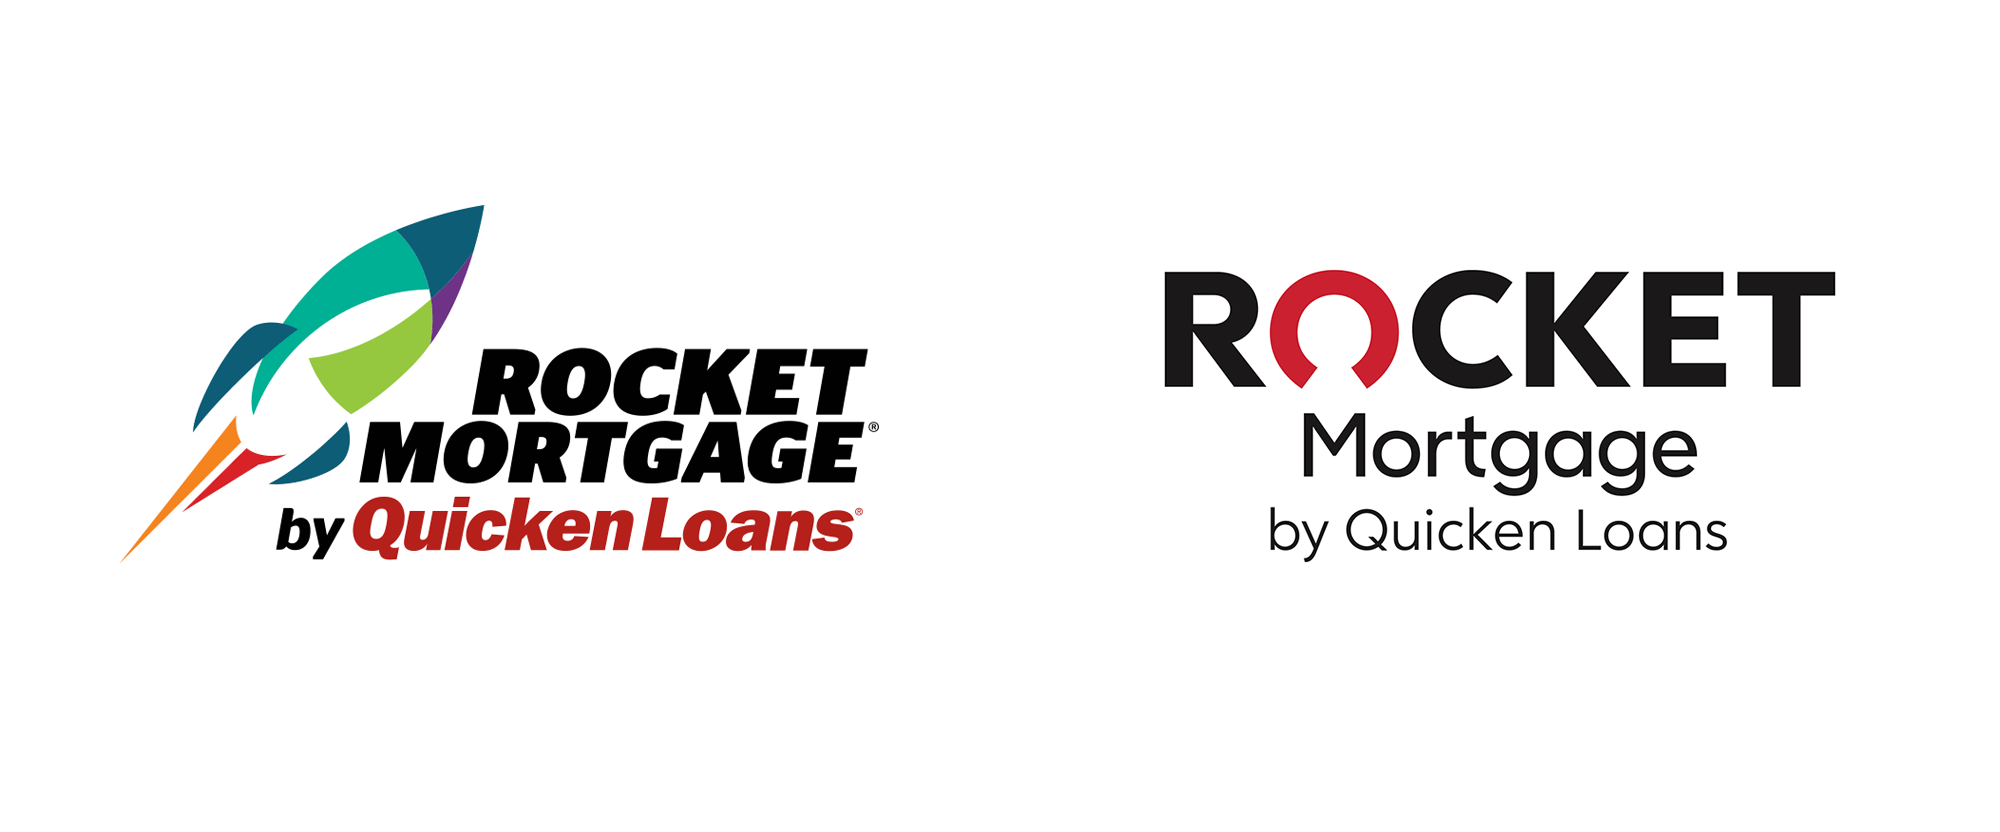 mortgage rates rocket mortgage